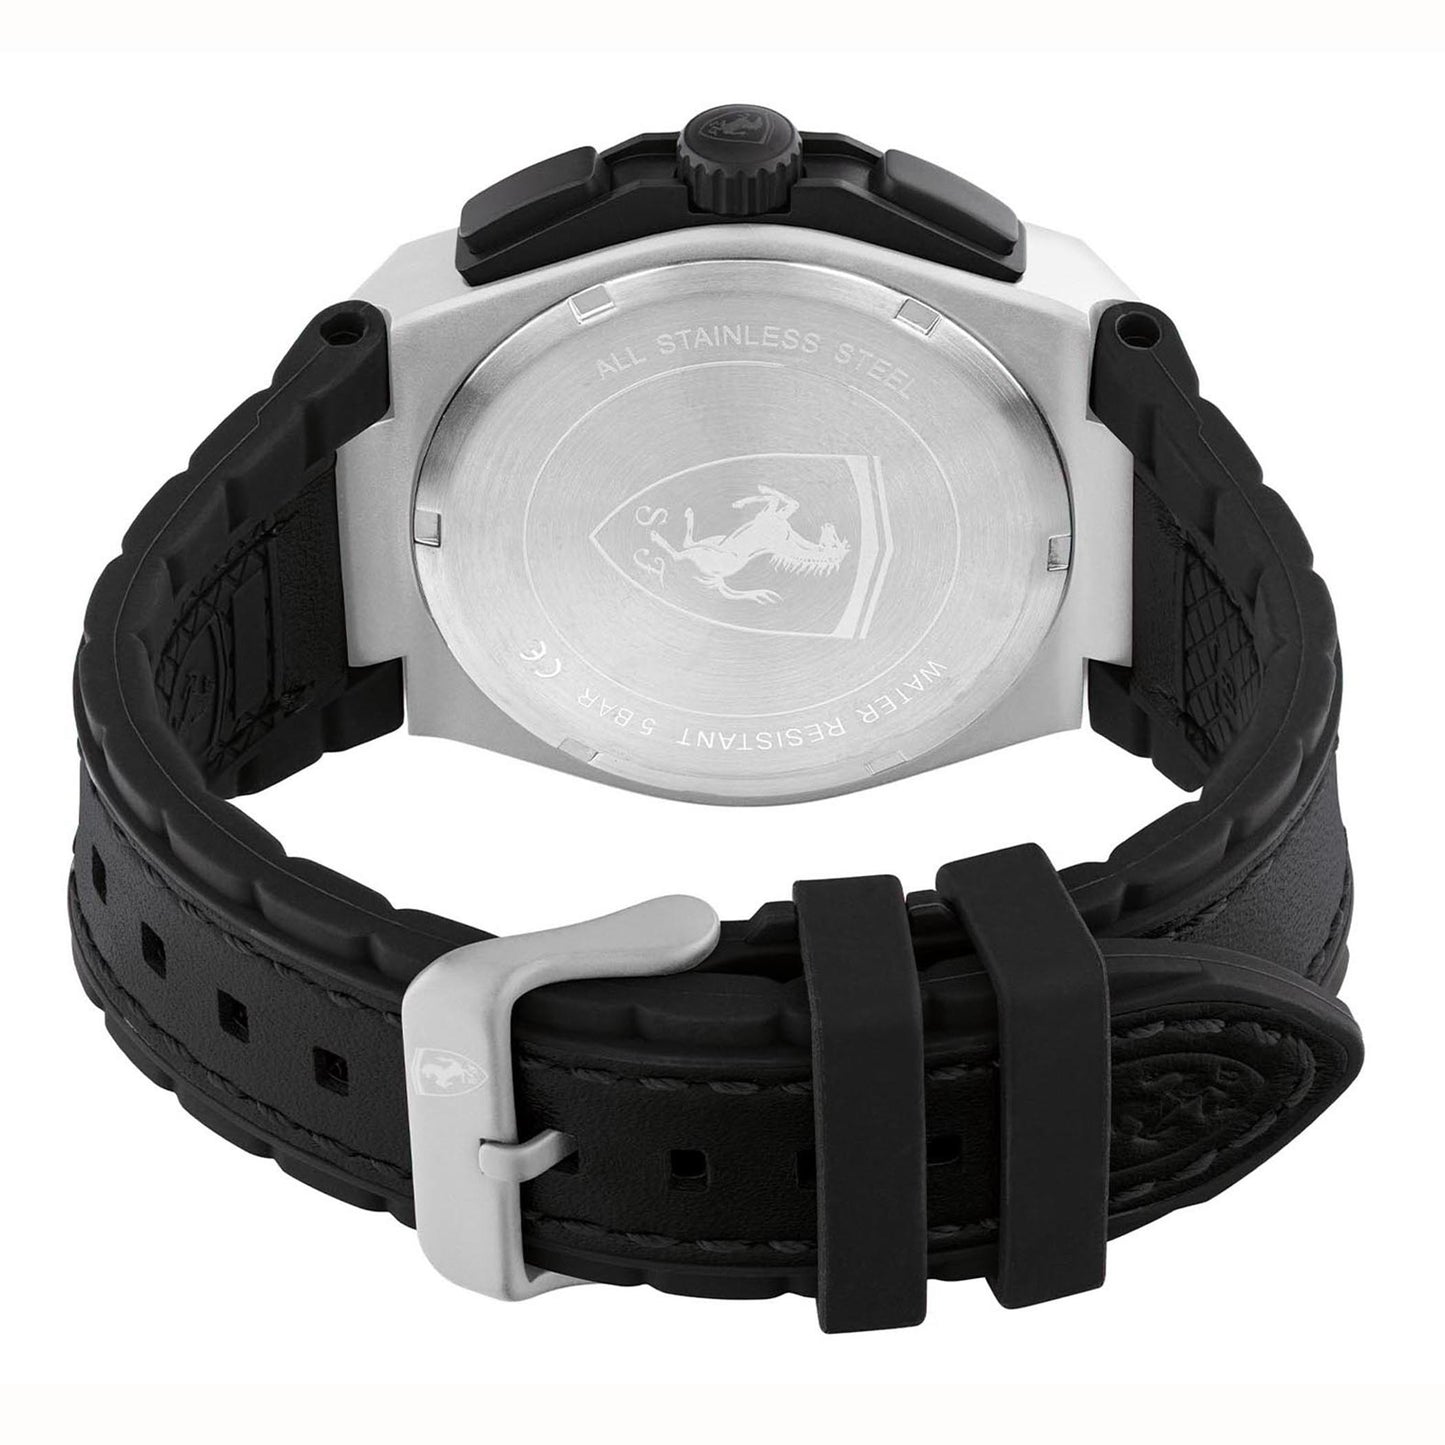 Scuderia Aspire Chronograph Black Watch (0830868)